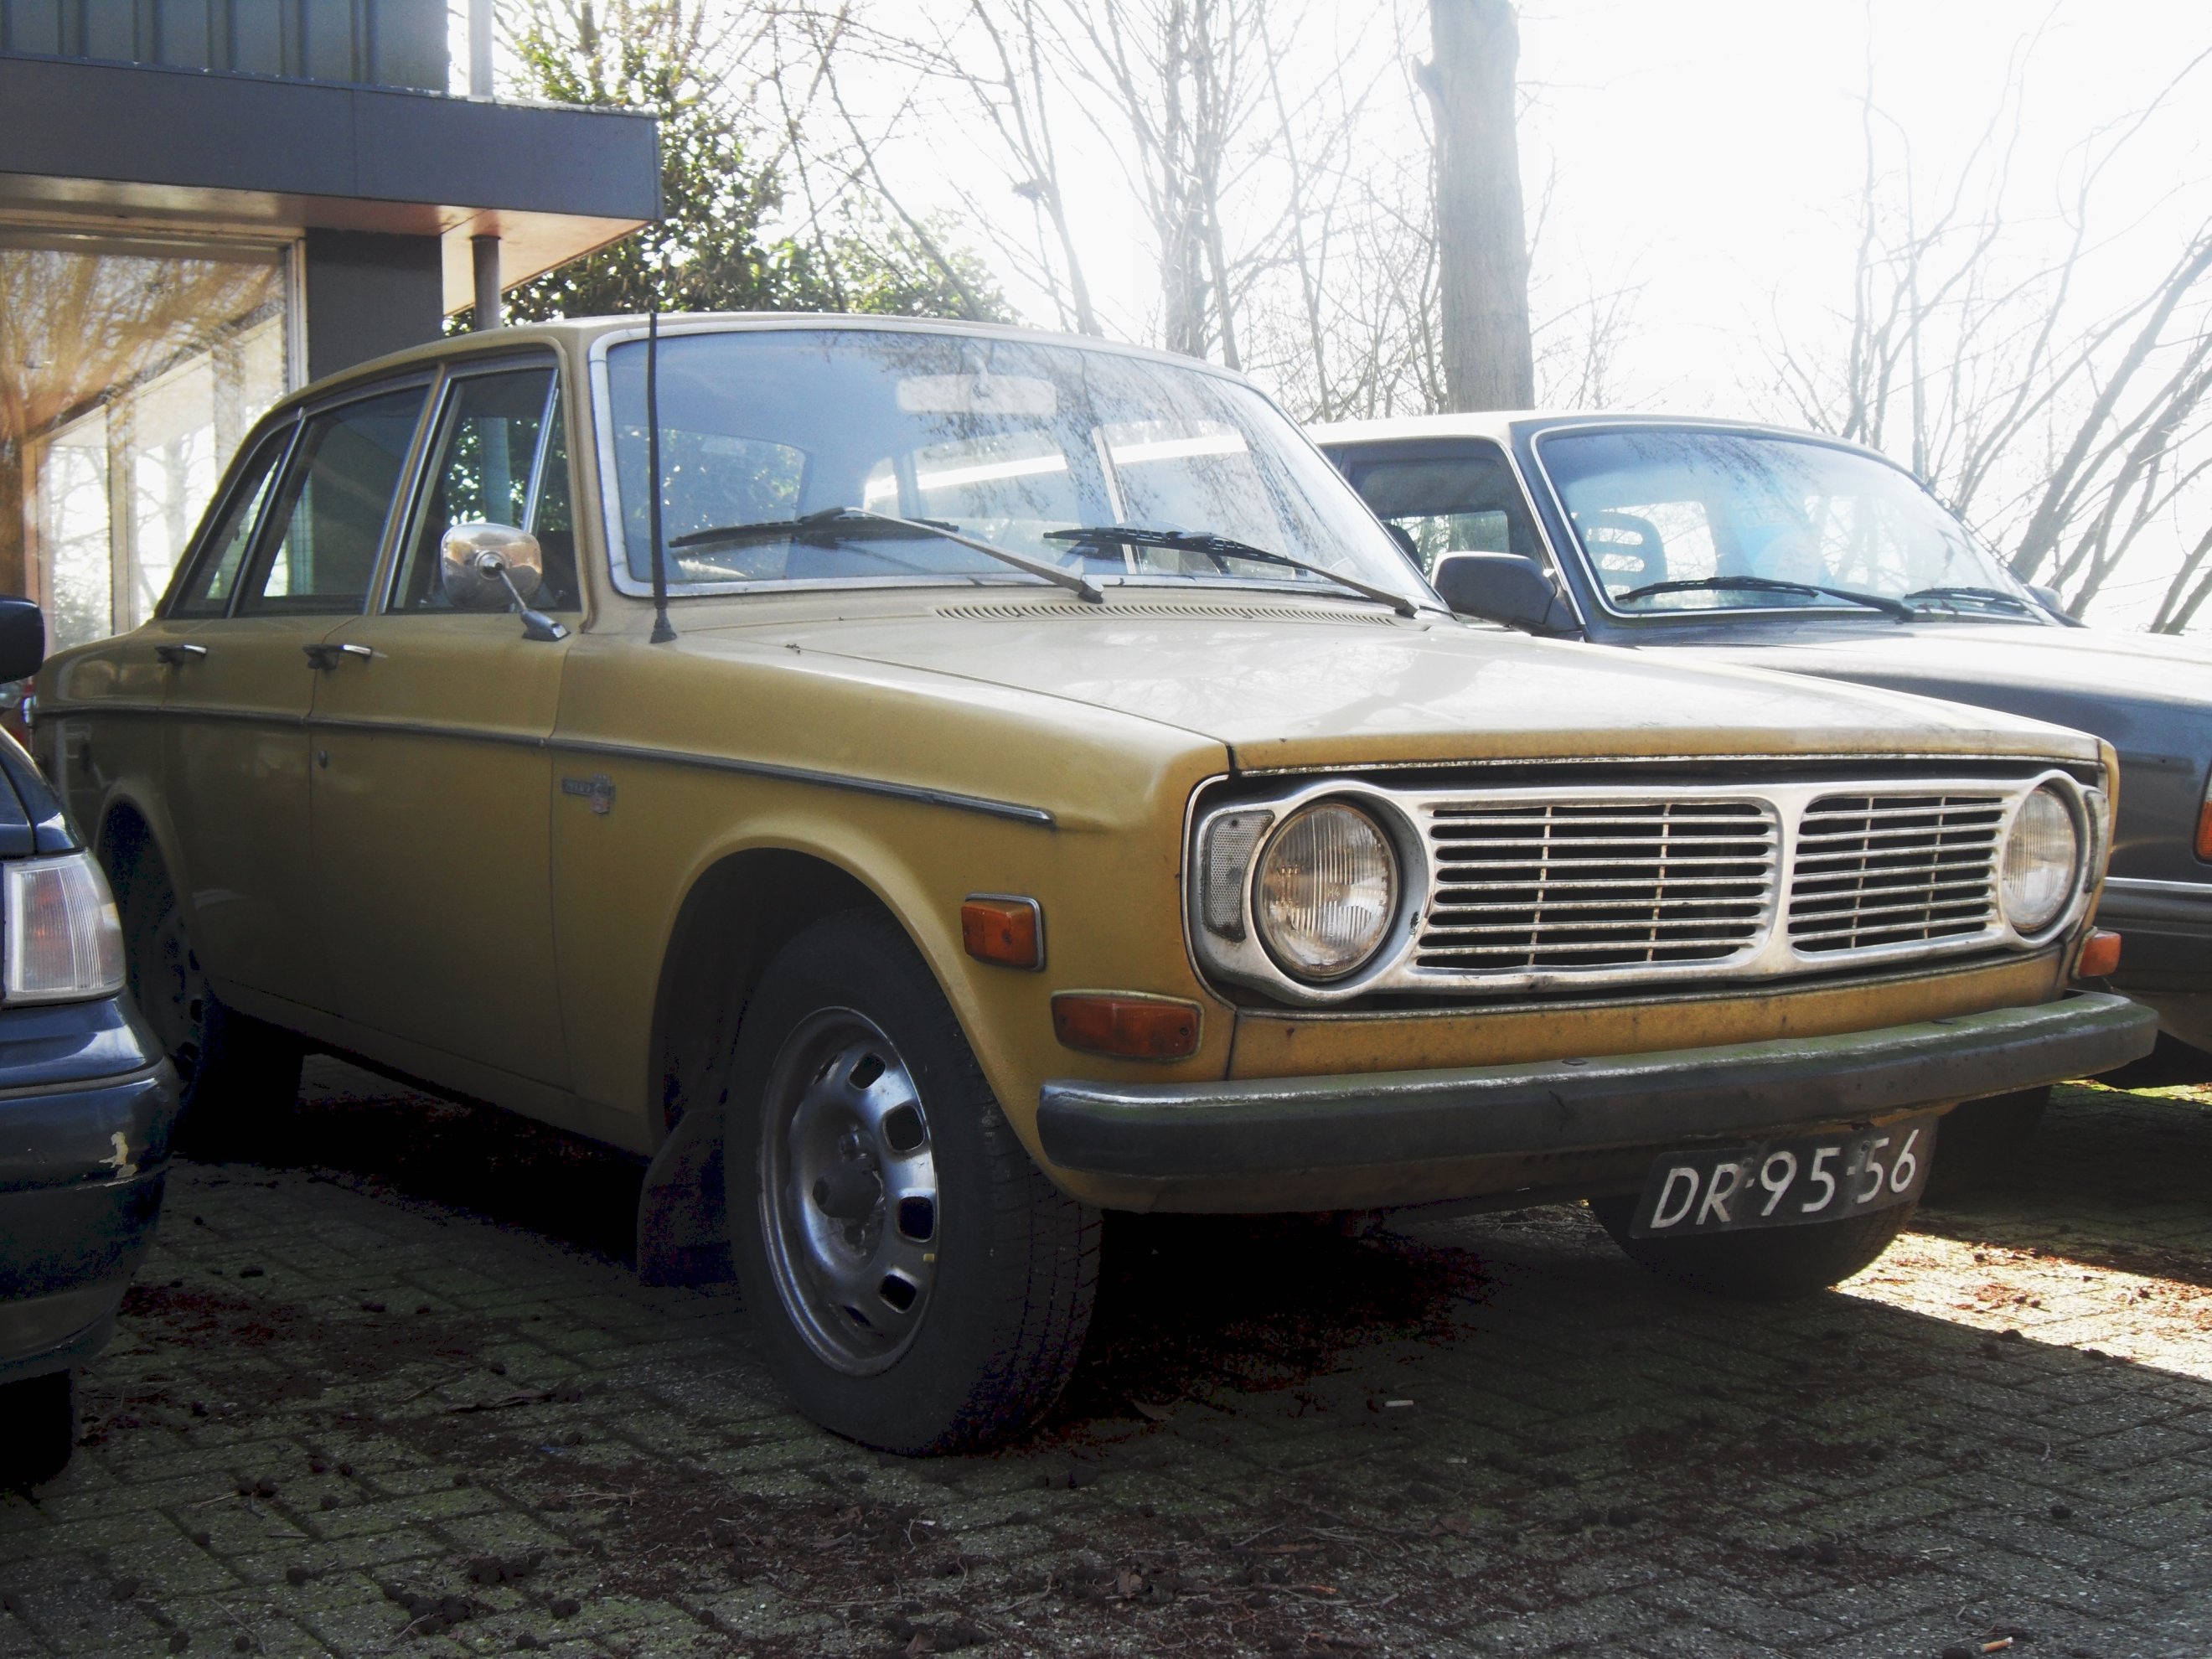 1970 Volvo 144S DR-95-56 | Flickr - Photo Sharing!